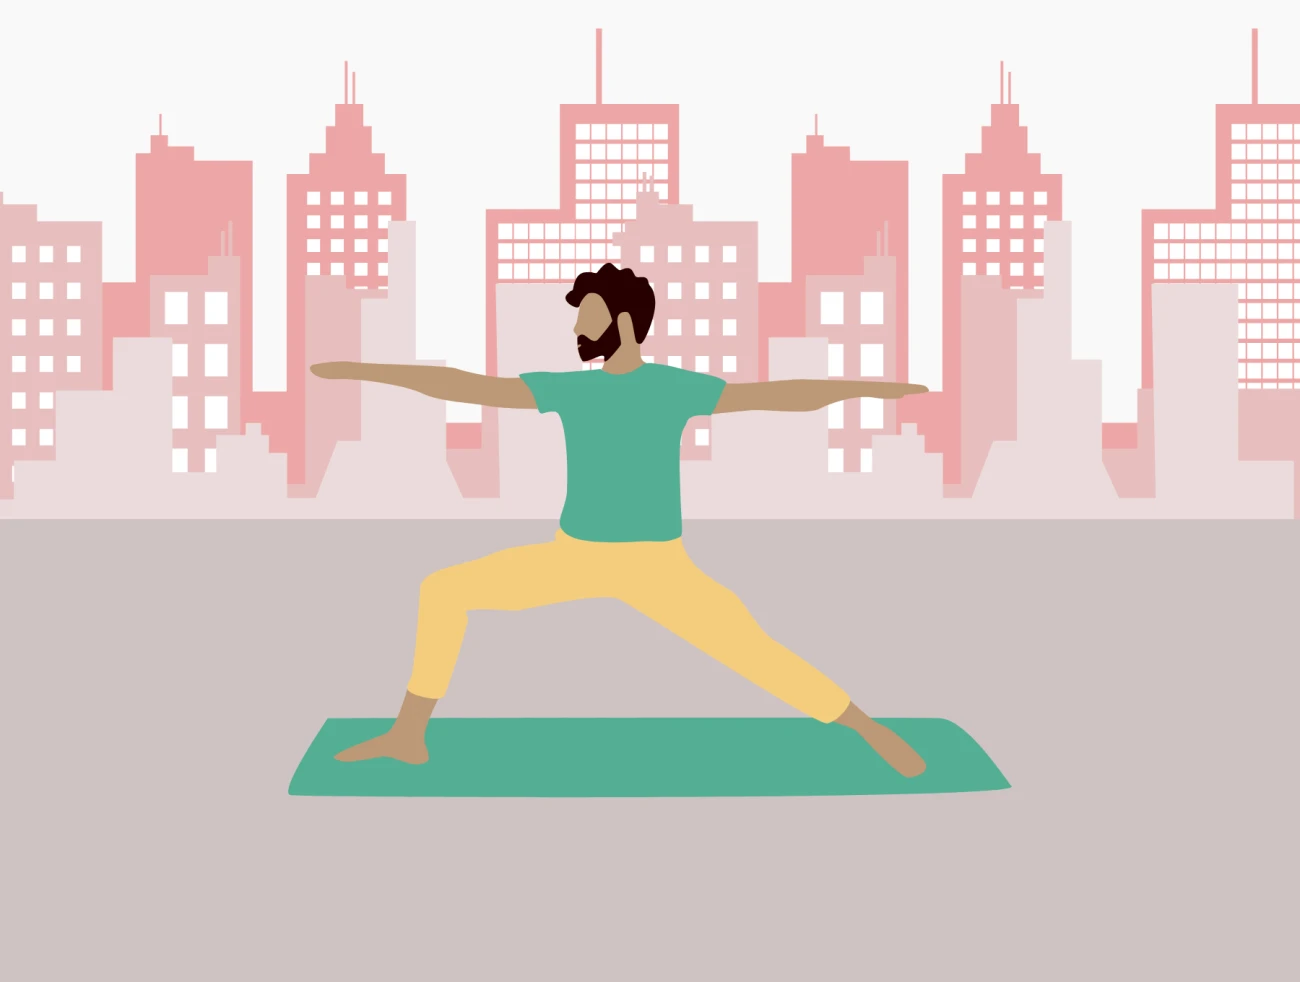 Yoga & Workout Vector Illustrations - 2 Color Styles 瑜伽和健身矢量插图-2种颜色-UI/UX、人物插画、场景插画、插画、运动健身-到位啦UI